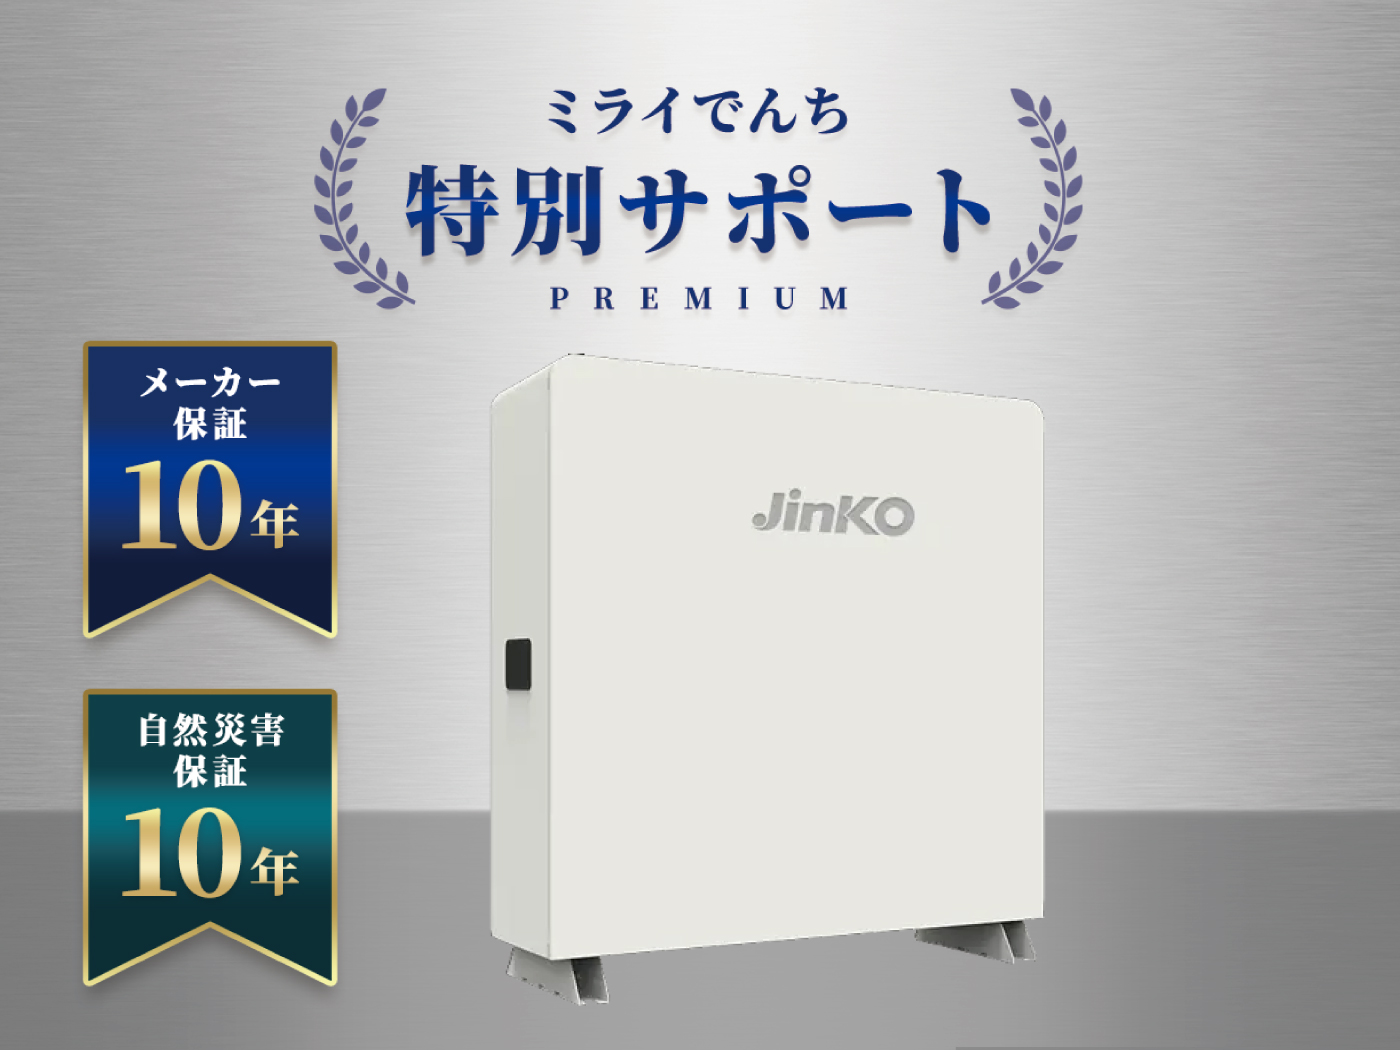 JinKO Solarジンコソーラーの蓄電池